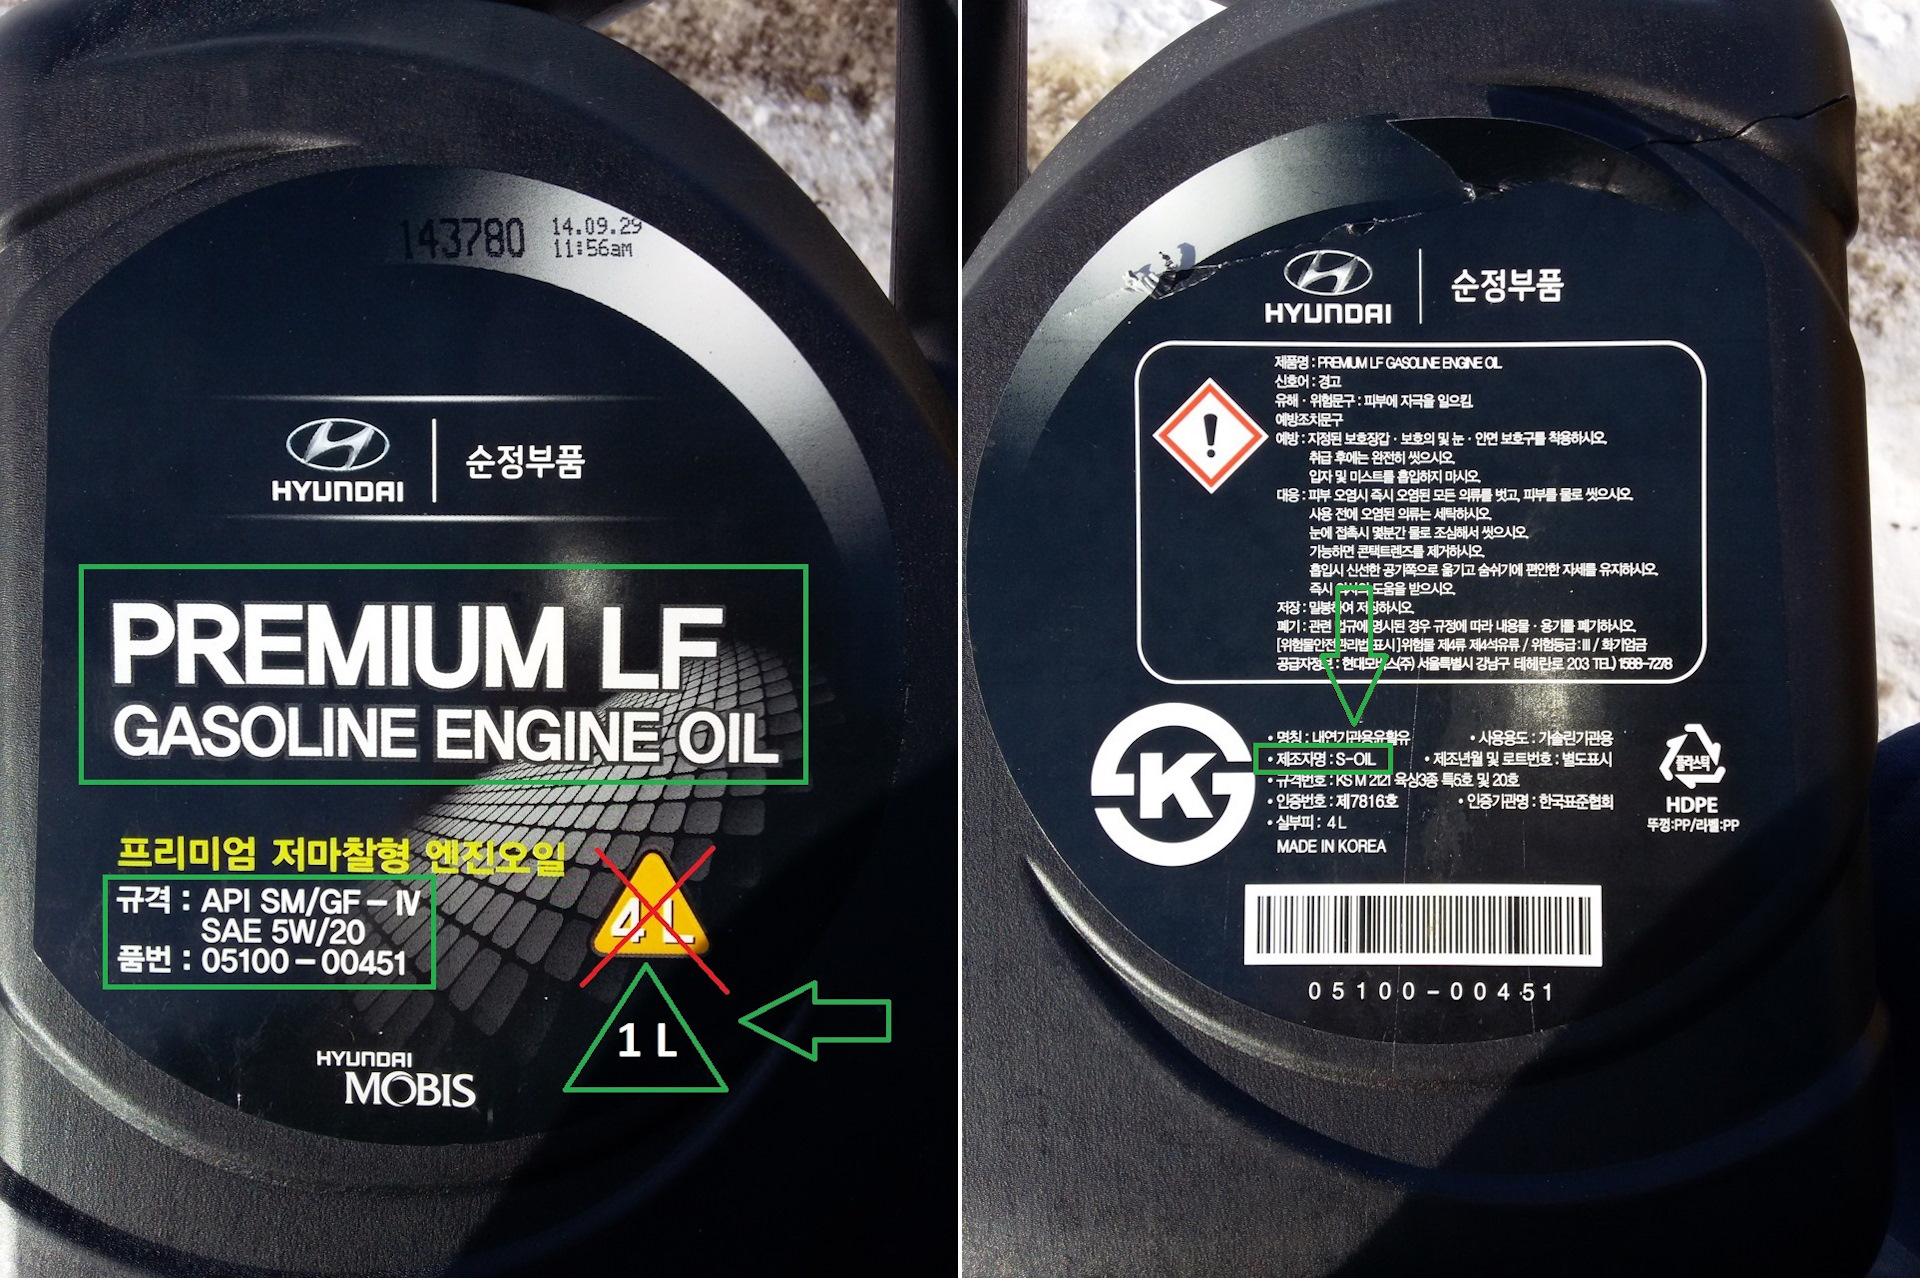 Premium LF gasoline 5w-20. Premium LF gasoline engine Oil 5w20 оригинал. Hyundai Premium LF 5w-20. Масло Hyundai mobis Premium LF gasoline 5w20 1l (Корея).